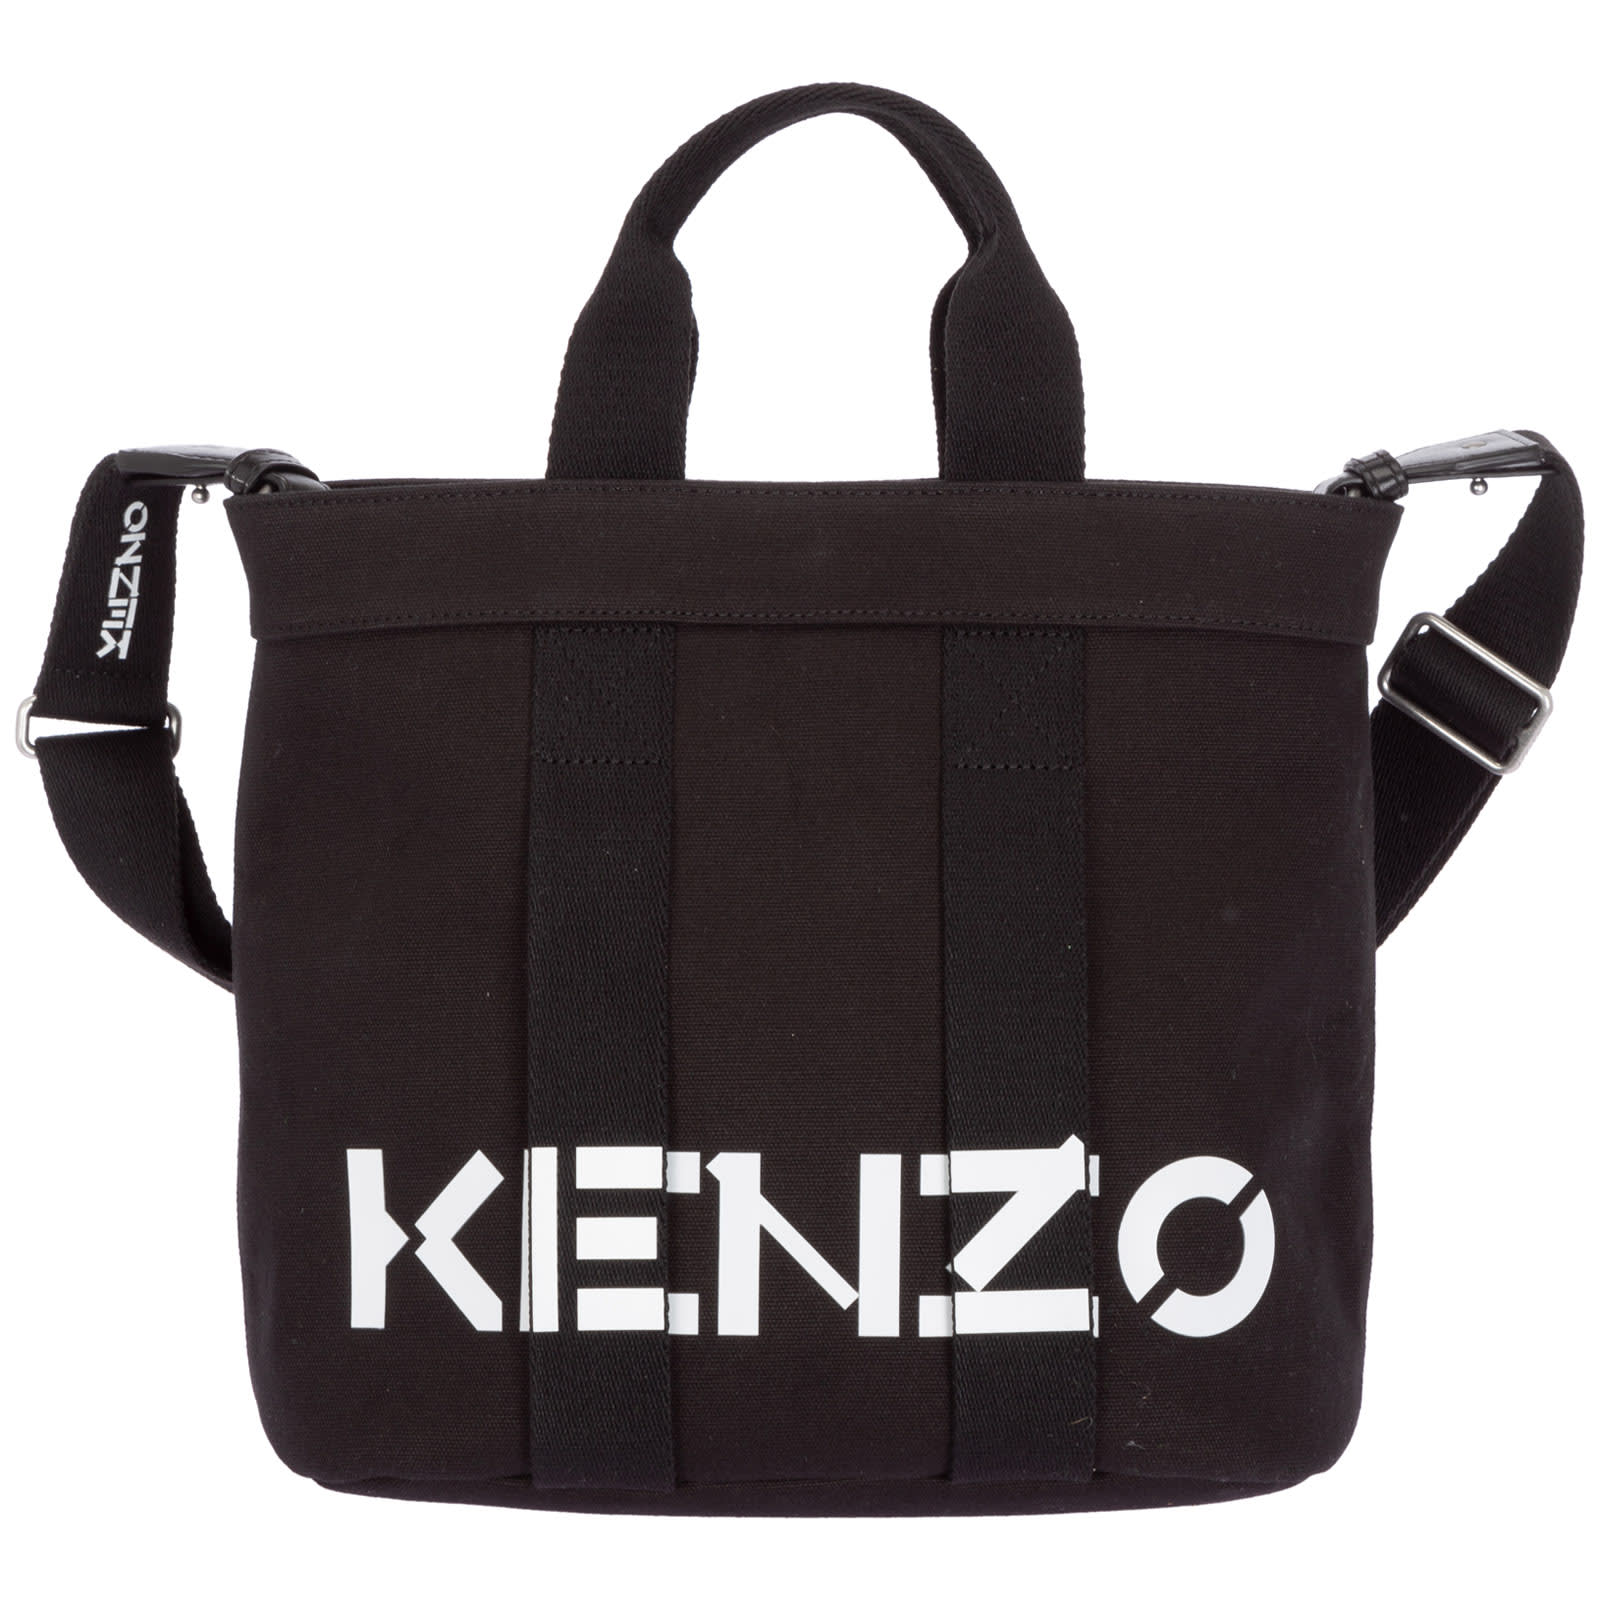 Kenzo Logo Handbags